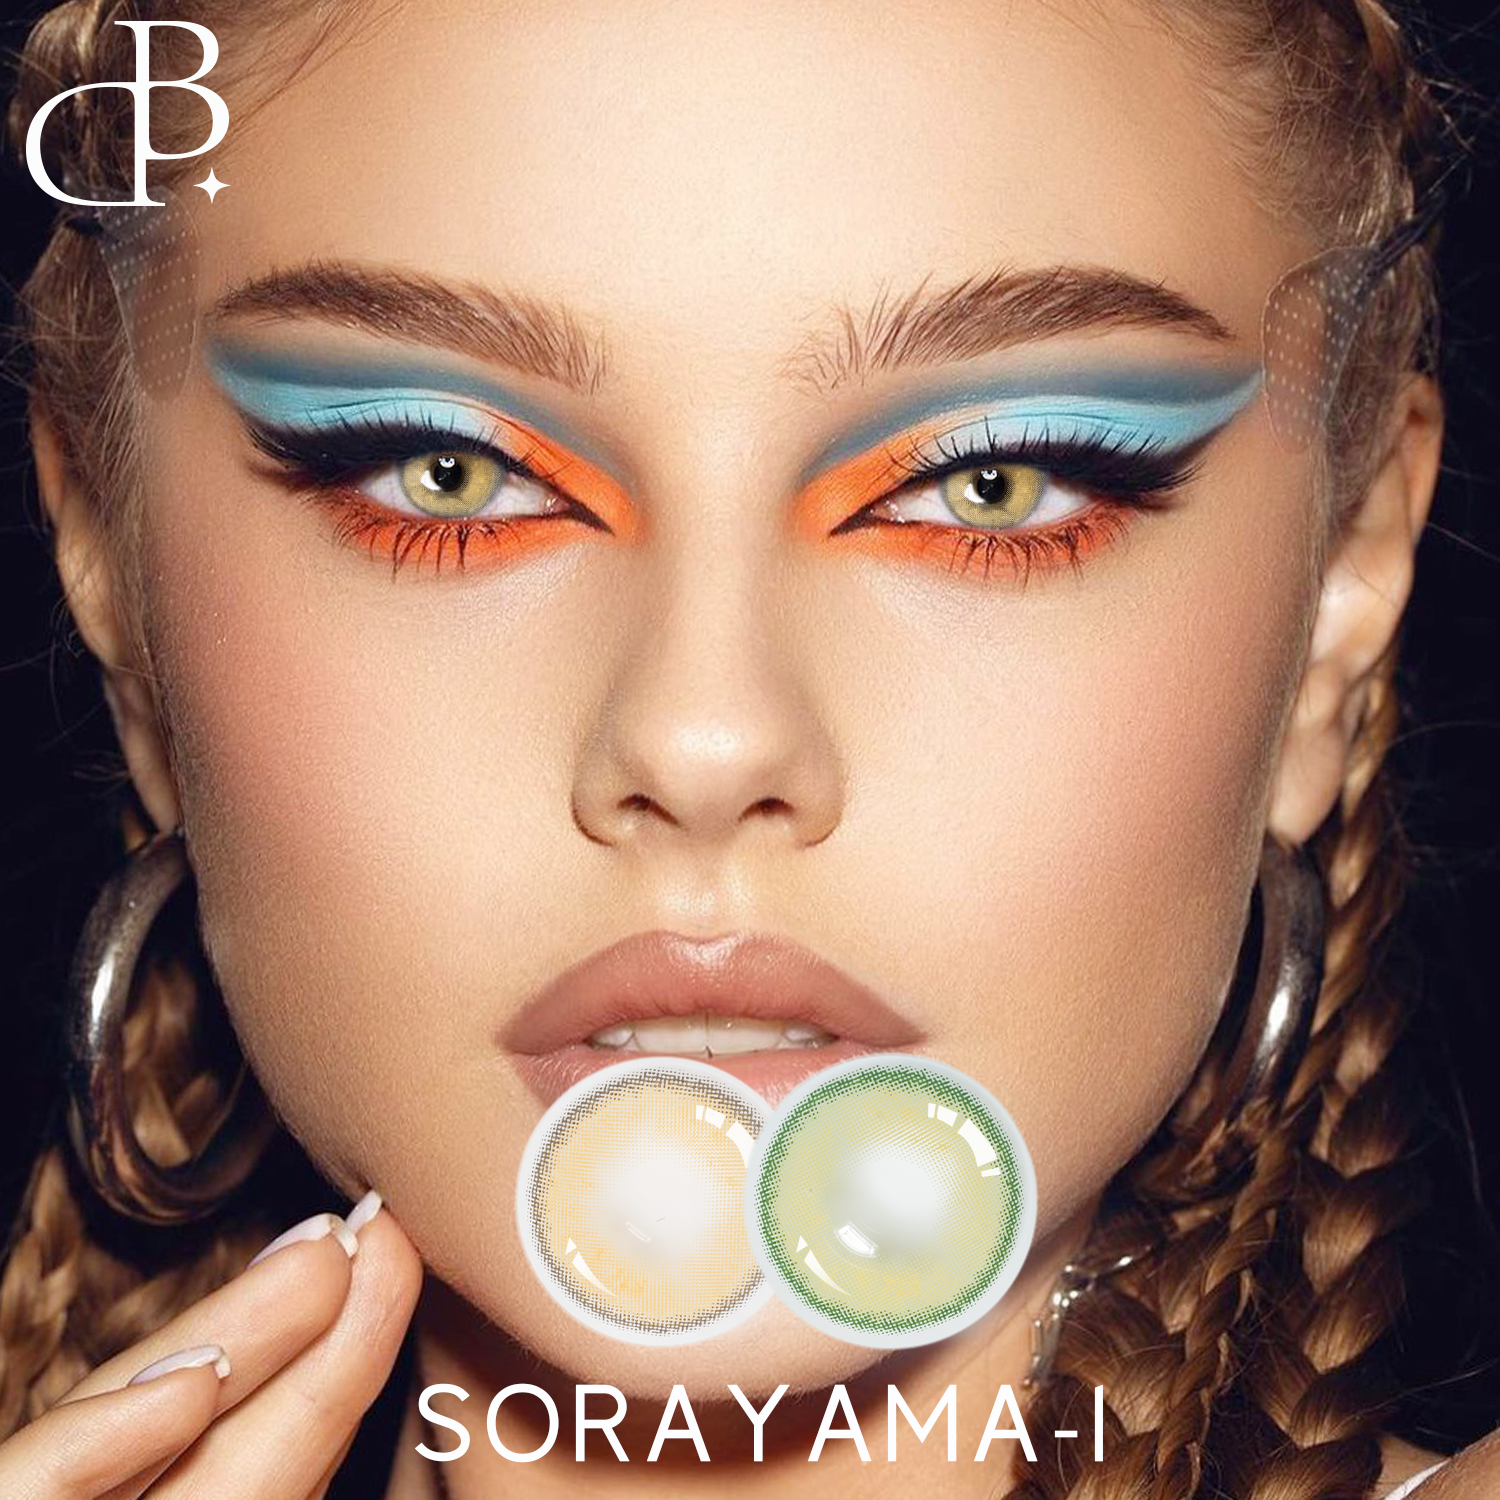 SORAYAMA China Power Cycle Water eye colour contacts Minilens Colored Contact Lens Soft Yearly Cosmetic စျေးပေါသော အရောင်မျက်ကပ်မှန် လက်ကား